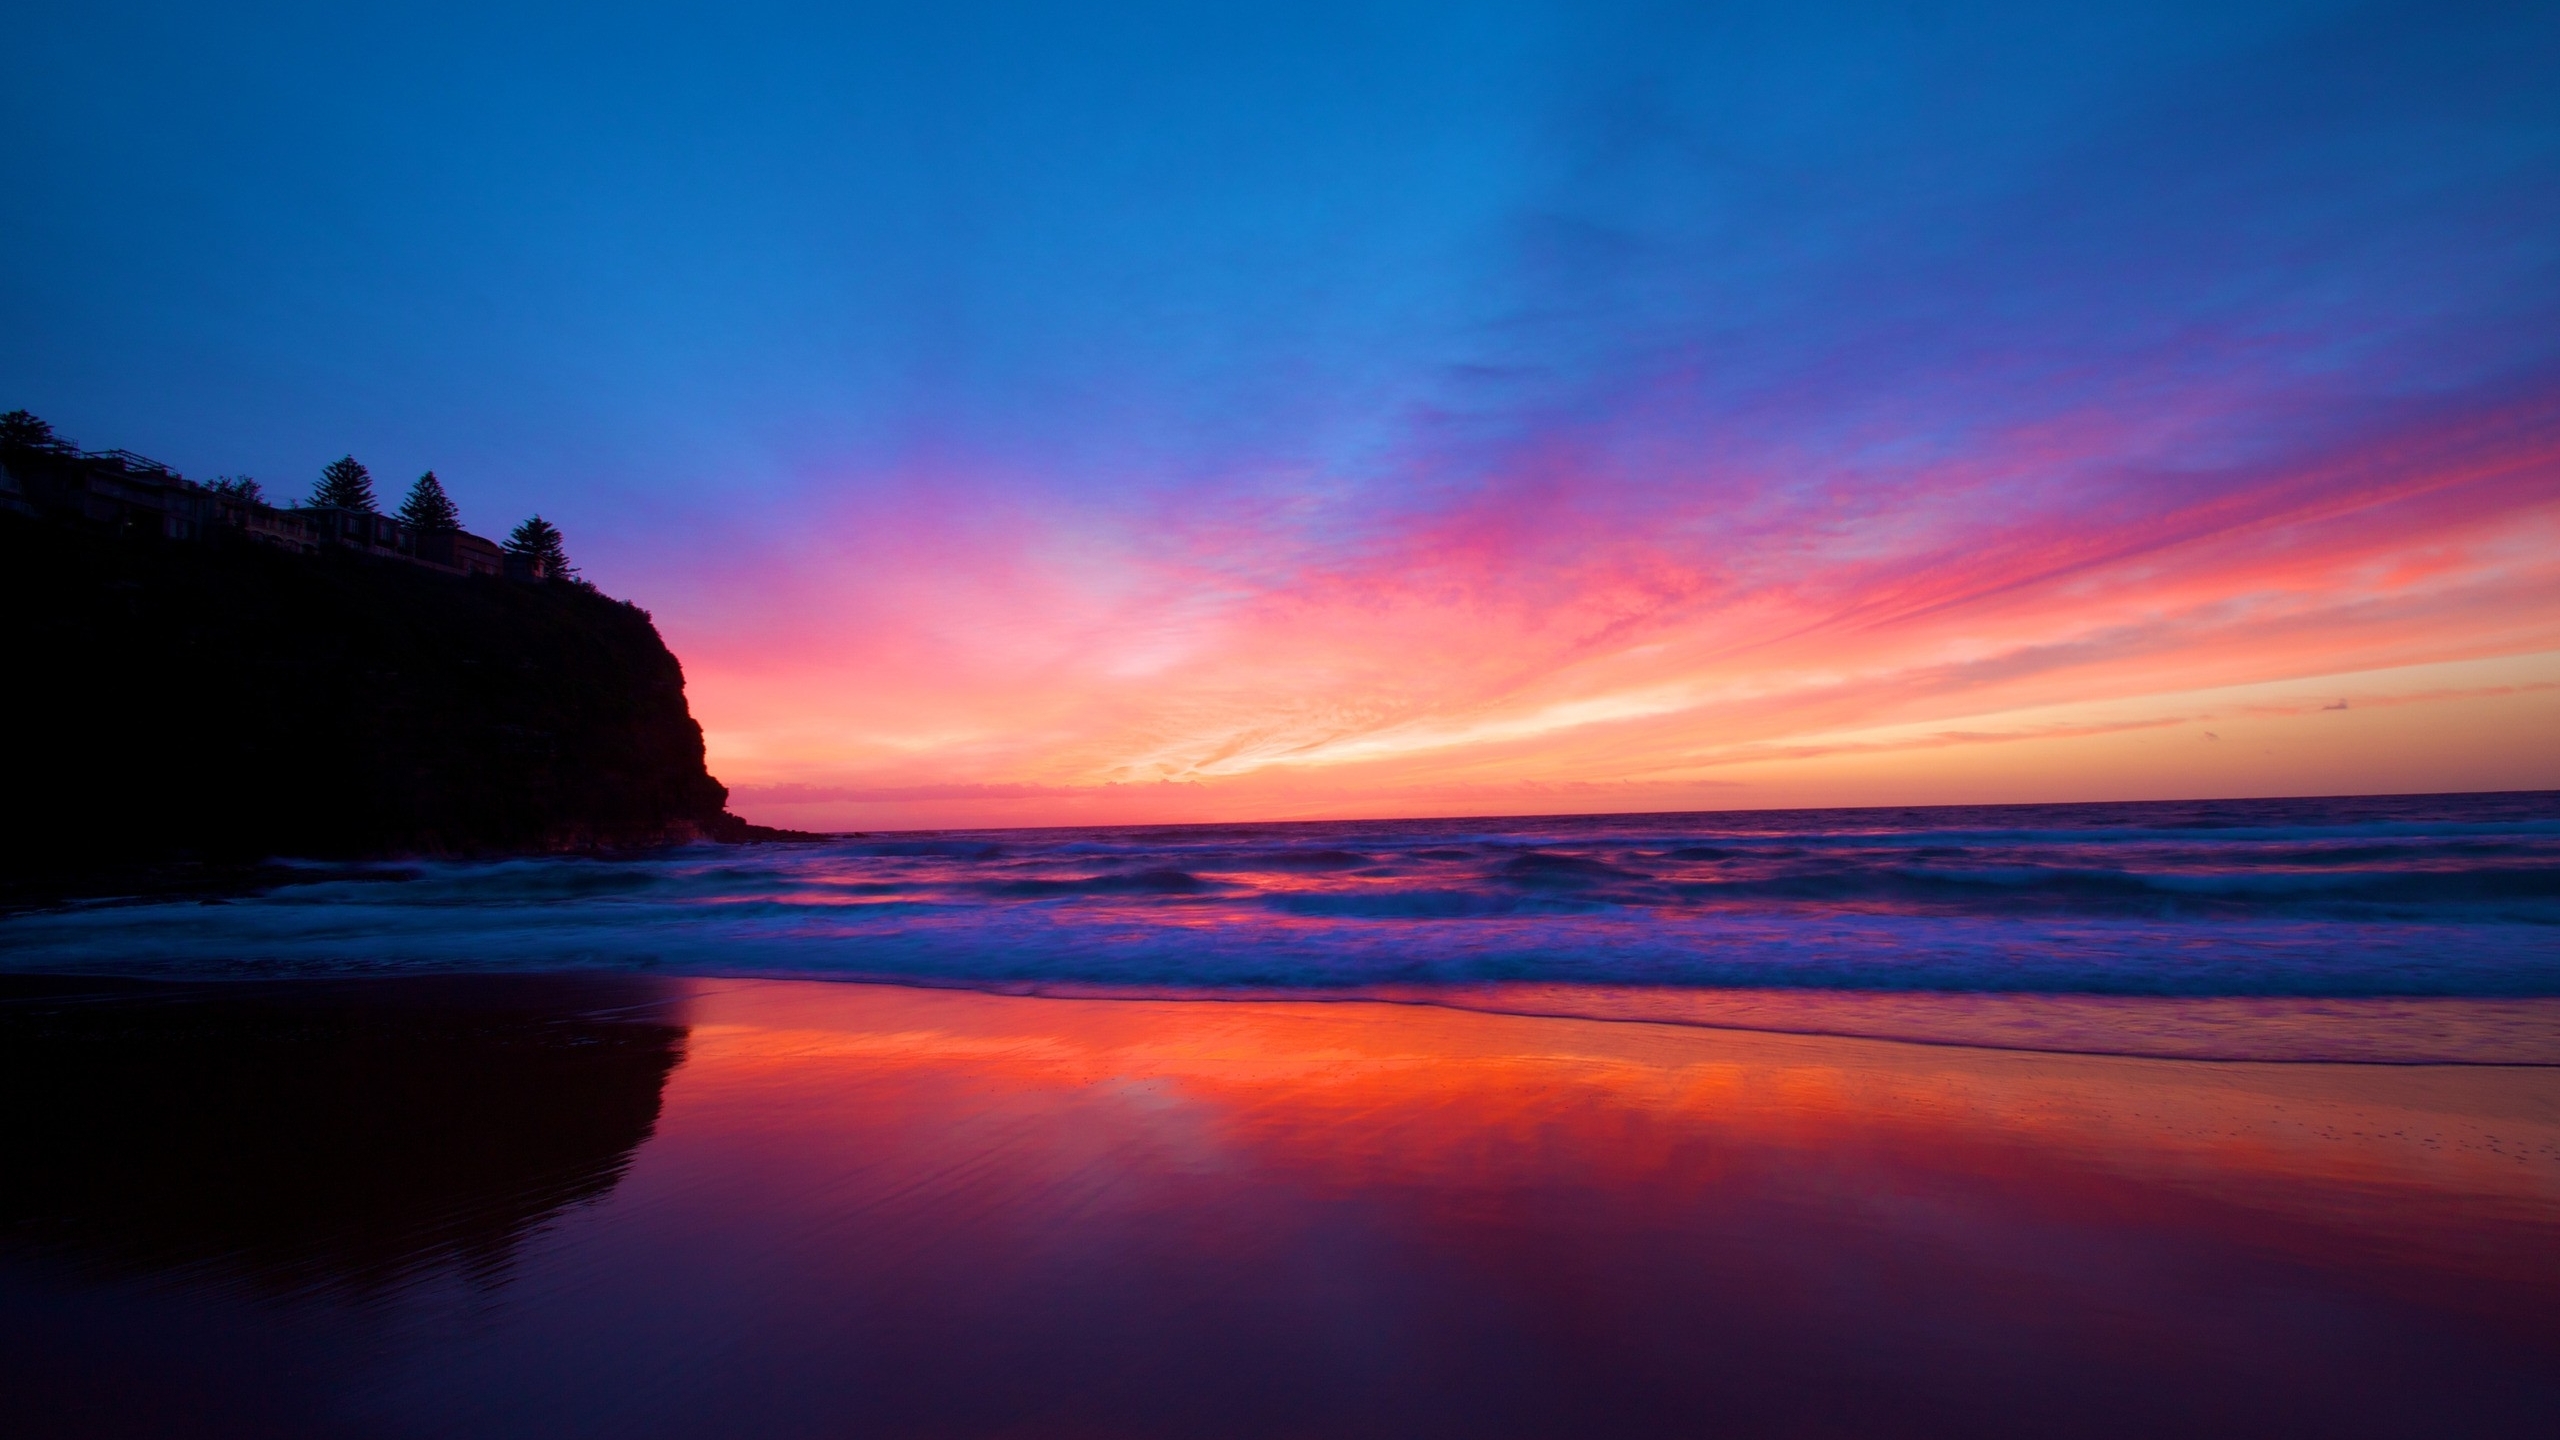 Amazing sunset at beach Mac Wallpaper Download. Free Mac Wallpaper